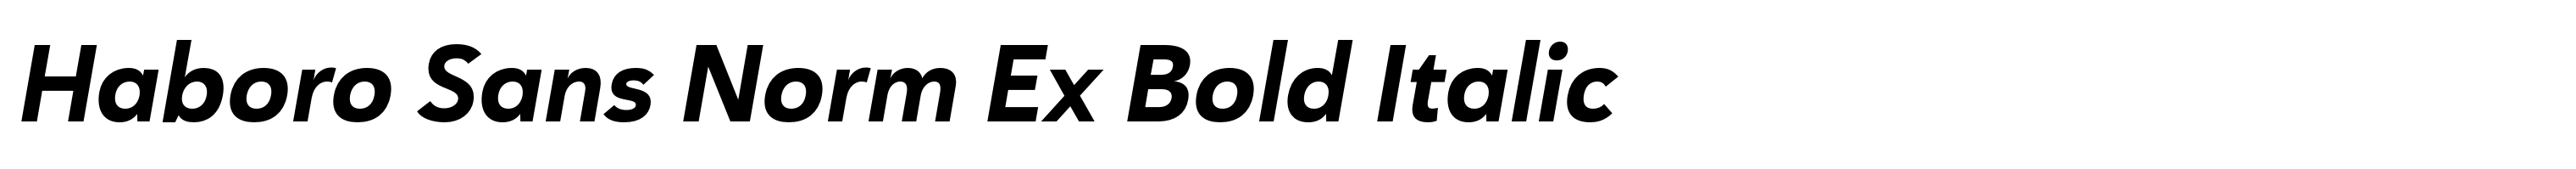 Haboro Sans Norm Ex Bold Italic